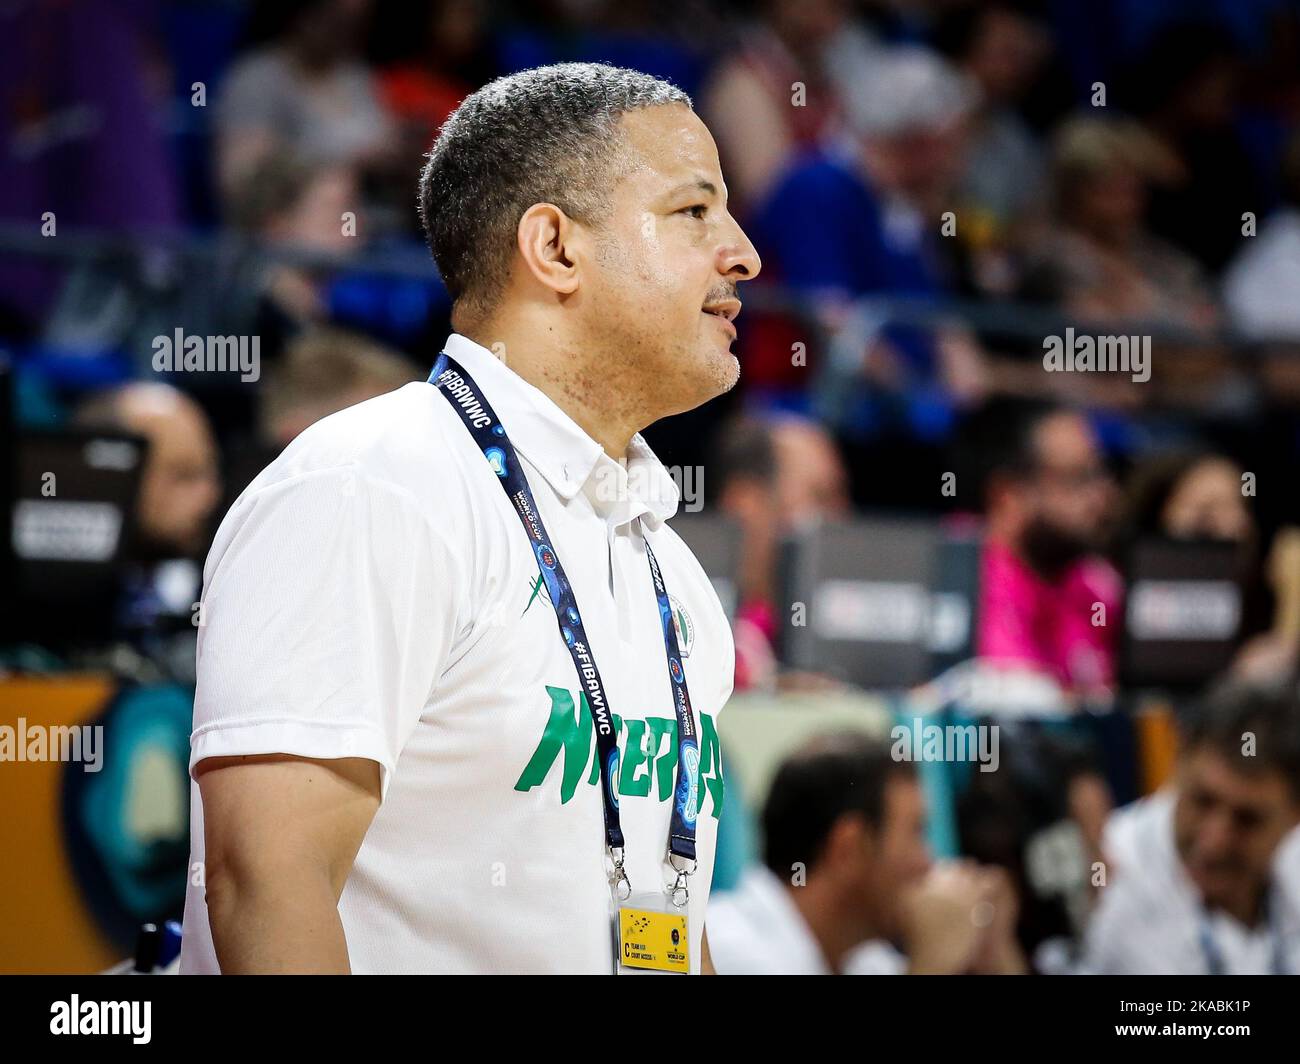 Spain, Tenerife, September 28, 2018: Nigerian national basketball head coach Otis Hughley Jr. during the FIBA Women's Basketball World Cup Stock Photo